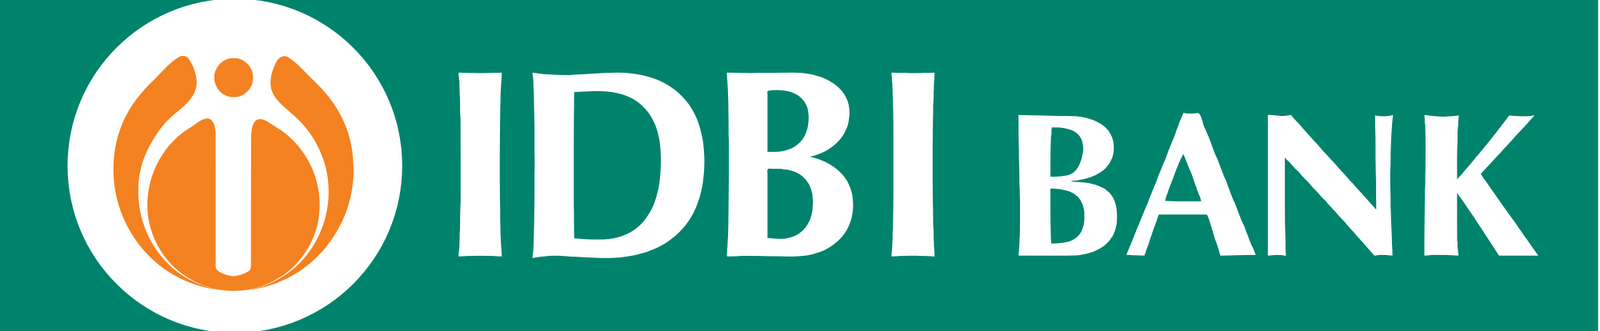 All Bank Logo - Nationalised Banks Logos and Founder Name | SA POST